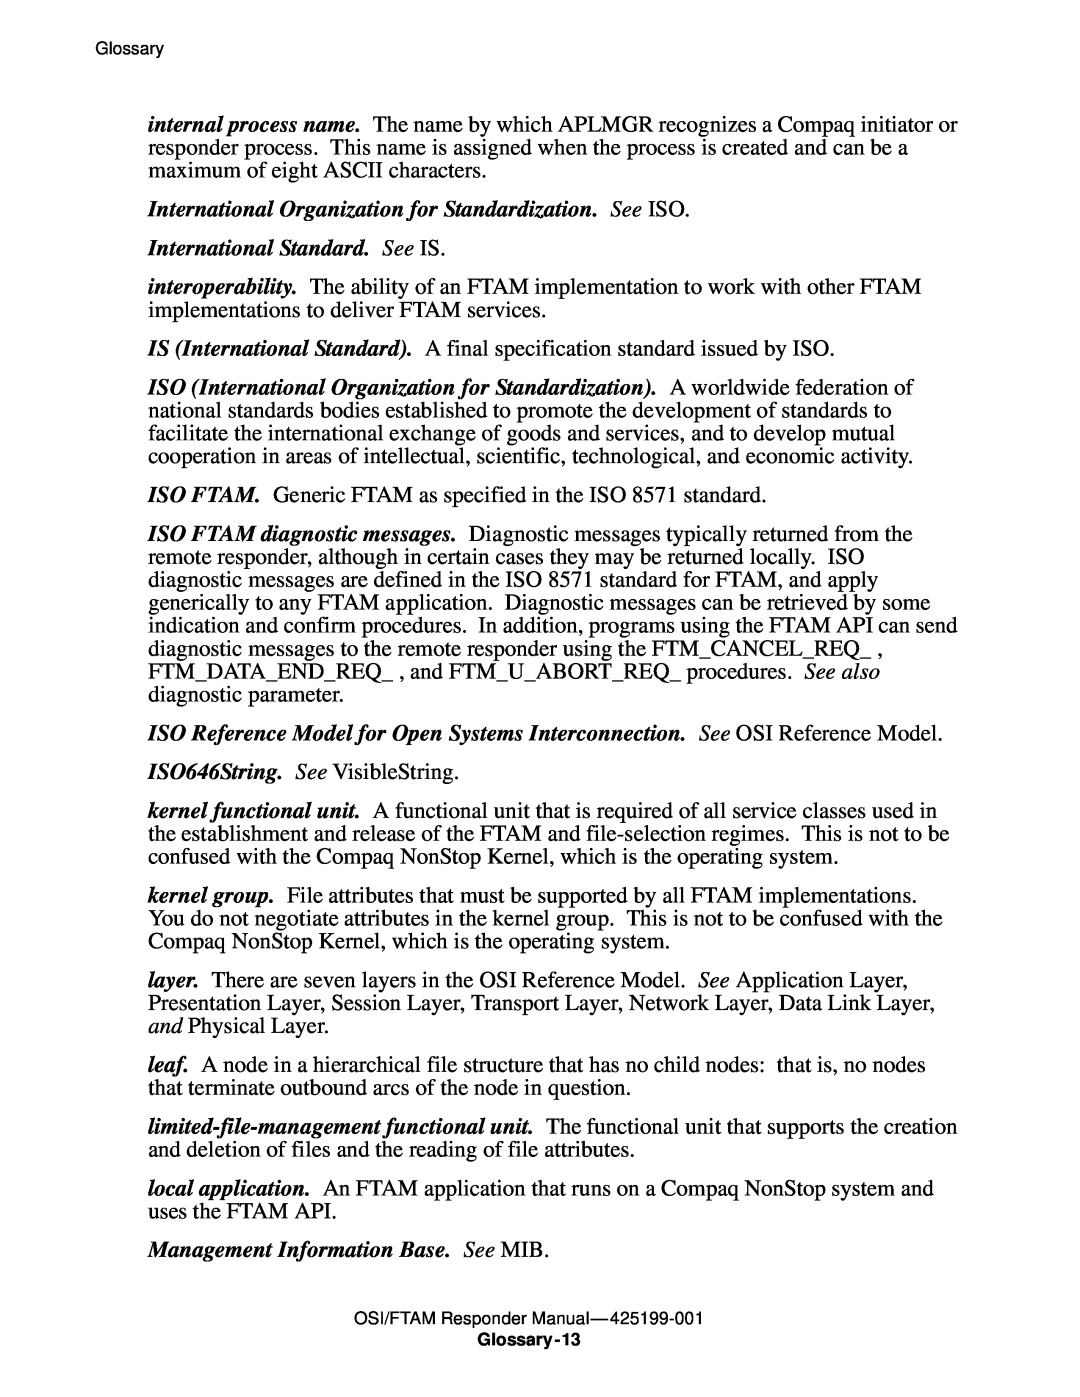 Compaq OSI/FTAM D43 manual International Organization for Standardization. See ISO, International Standard. See IS 